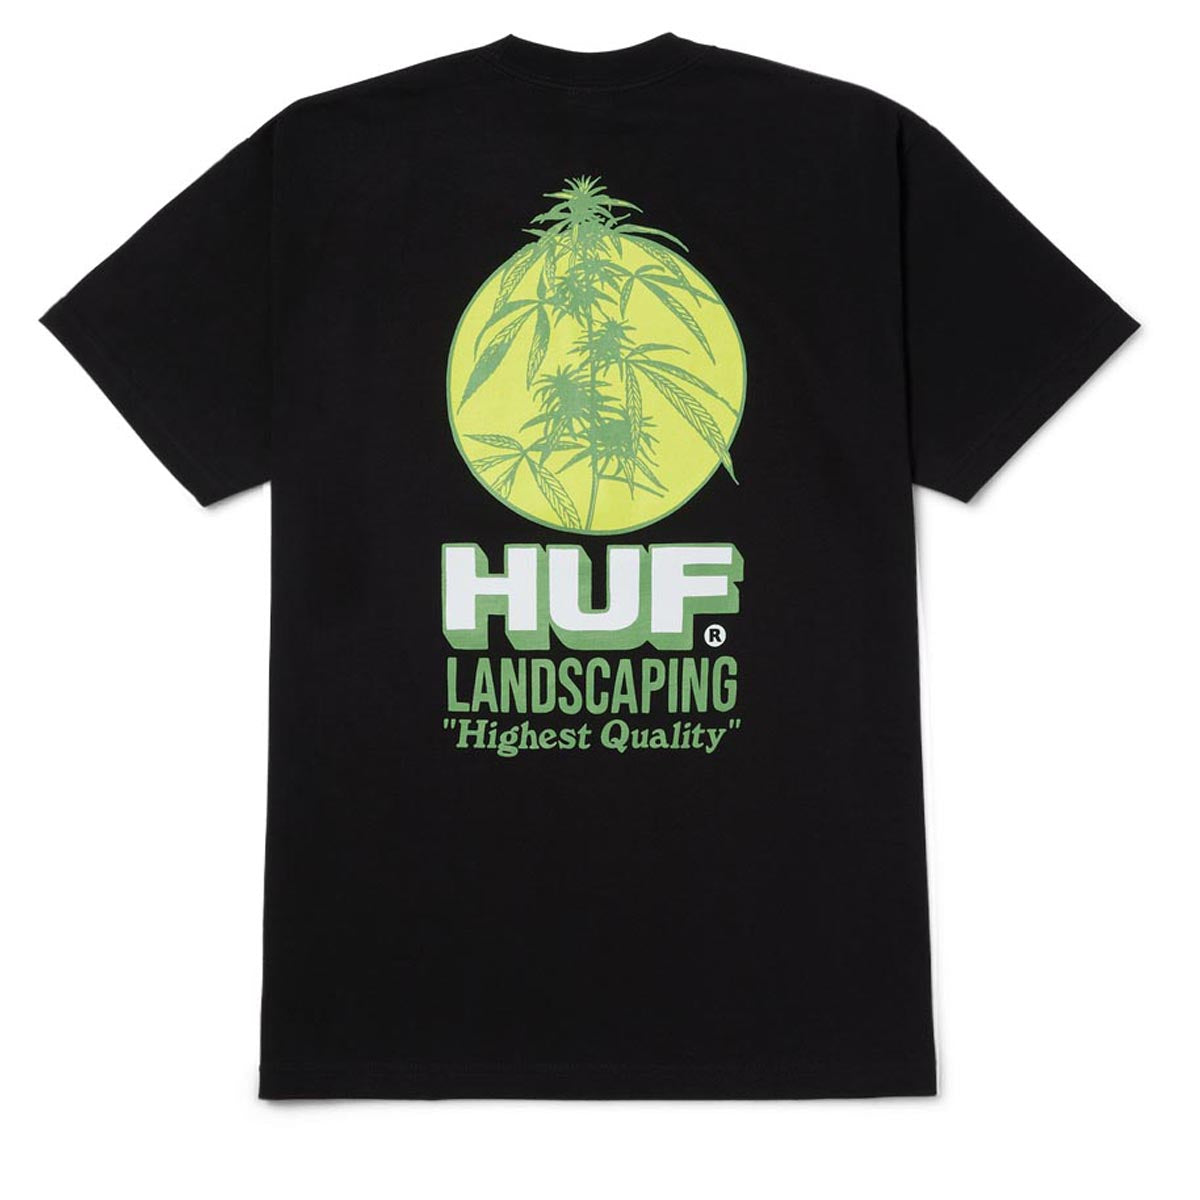 HUF Landscaping T-Shirt - Black image 1